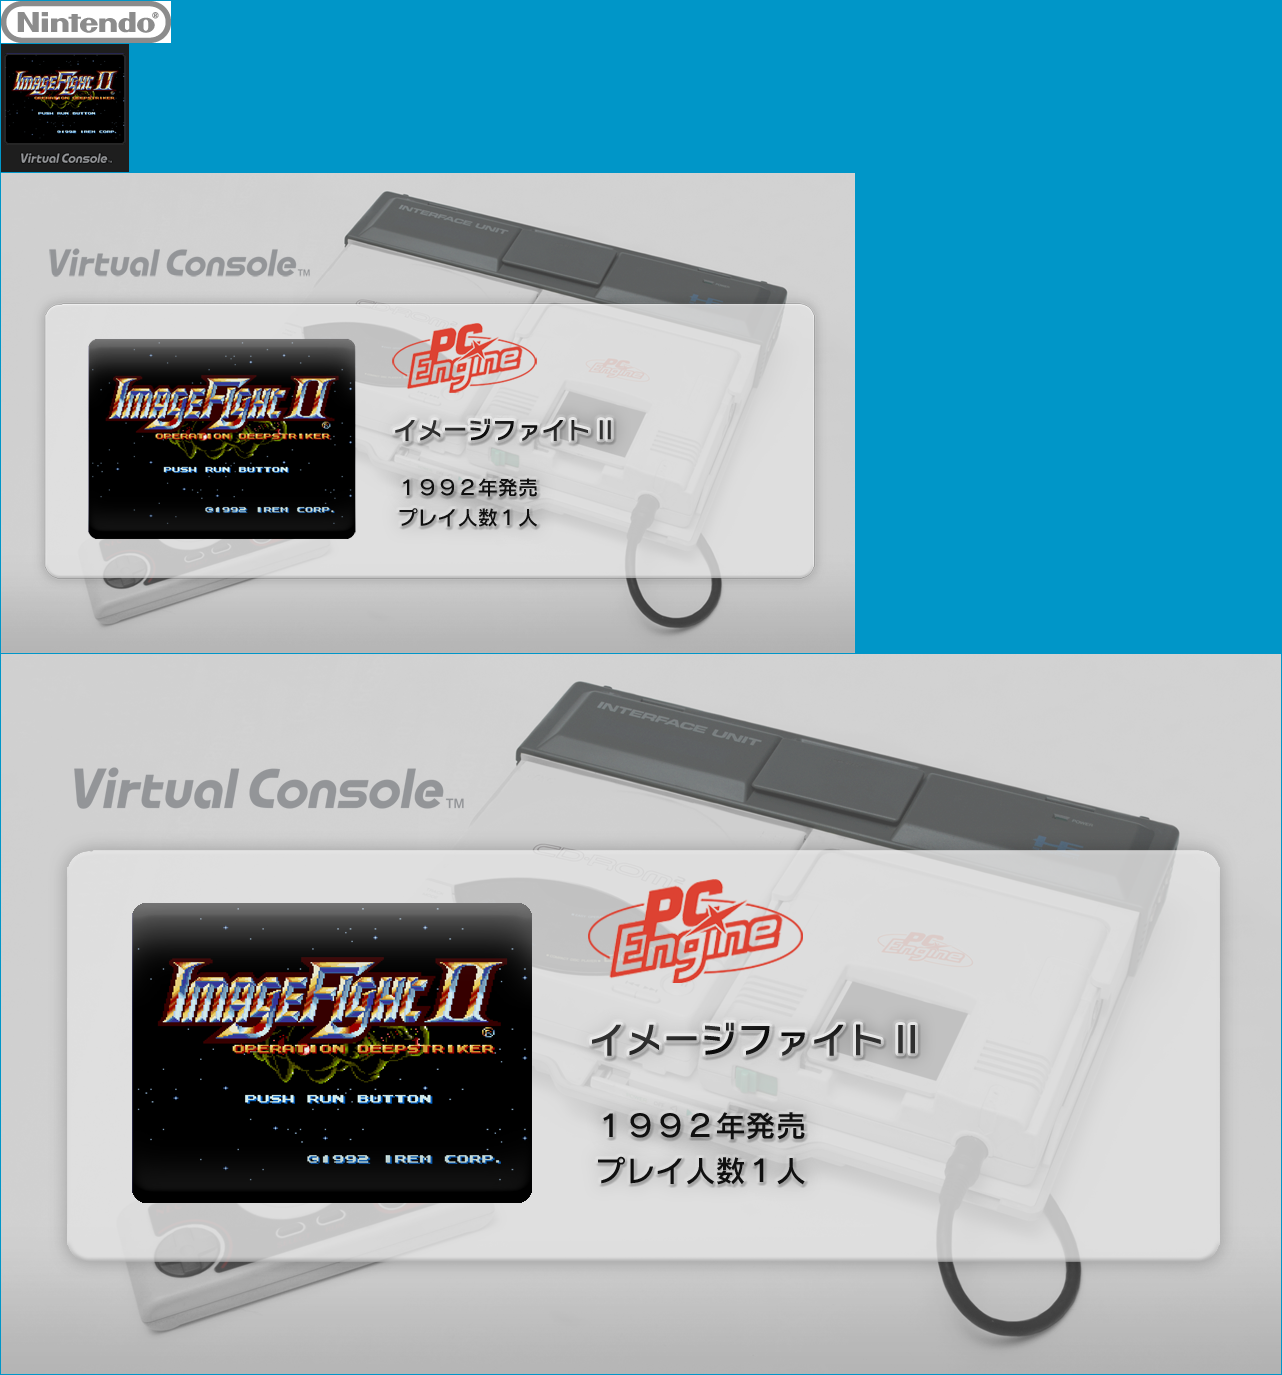 Virtual Console - Image Fight II